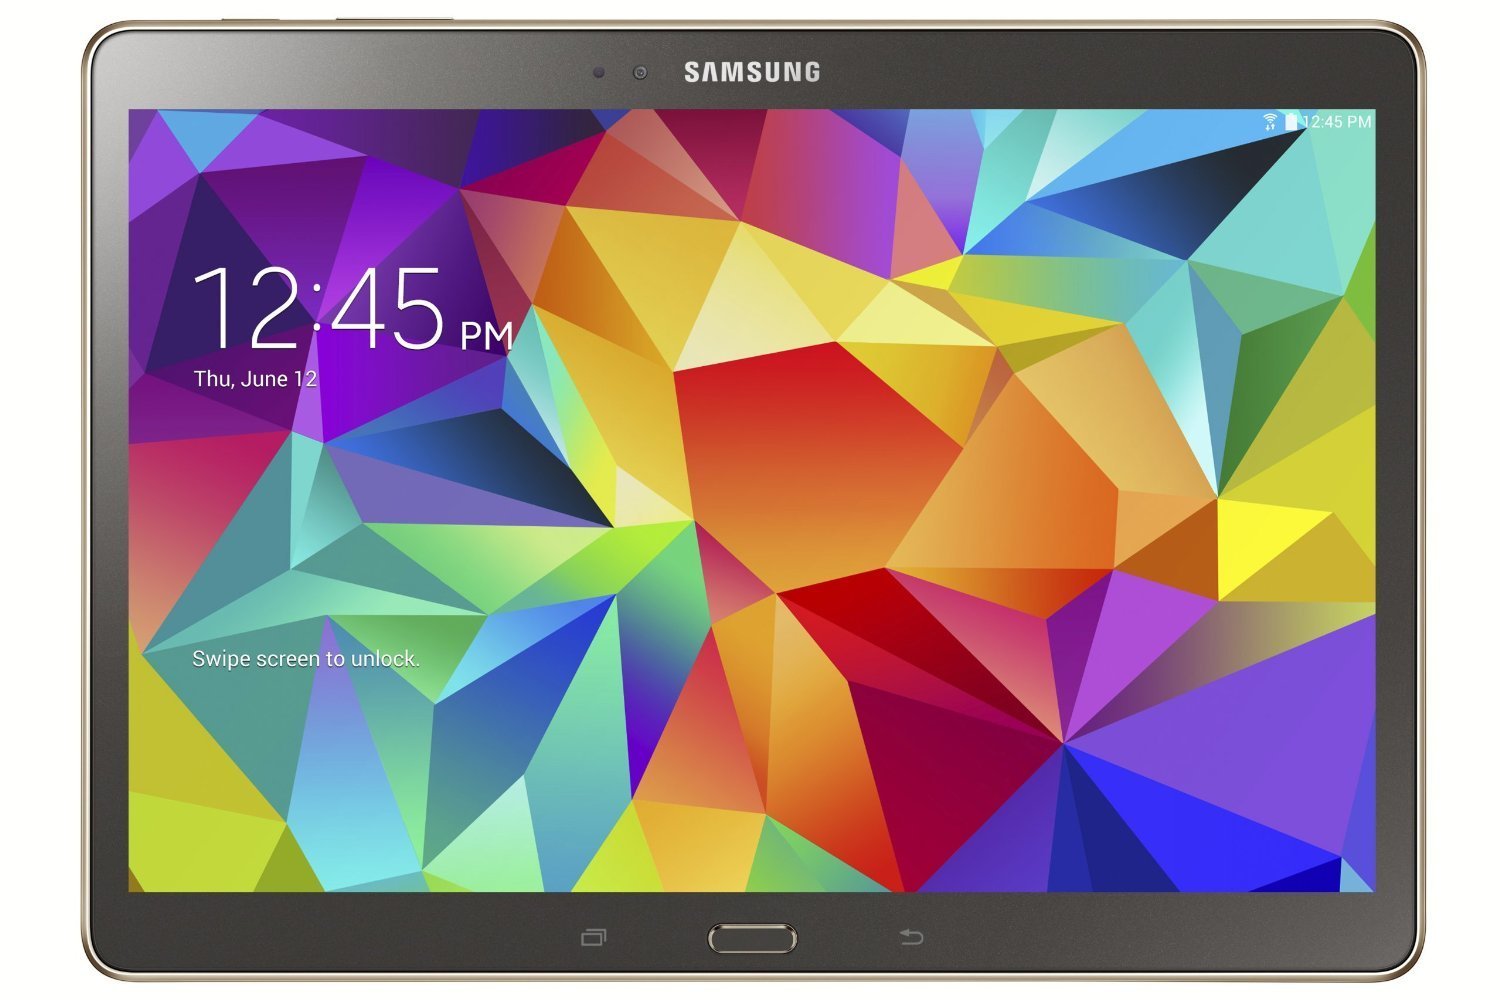 Samsung Galaxy Tab S SM T805 Tablet